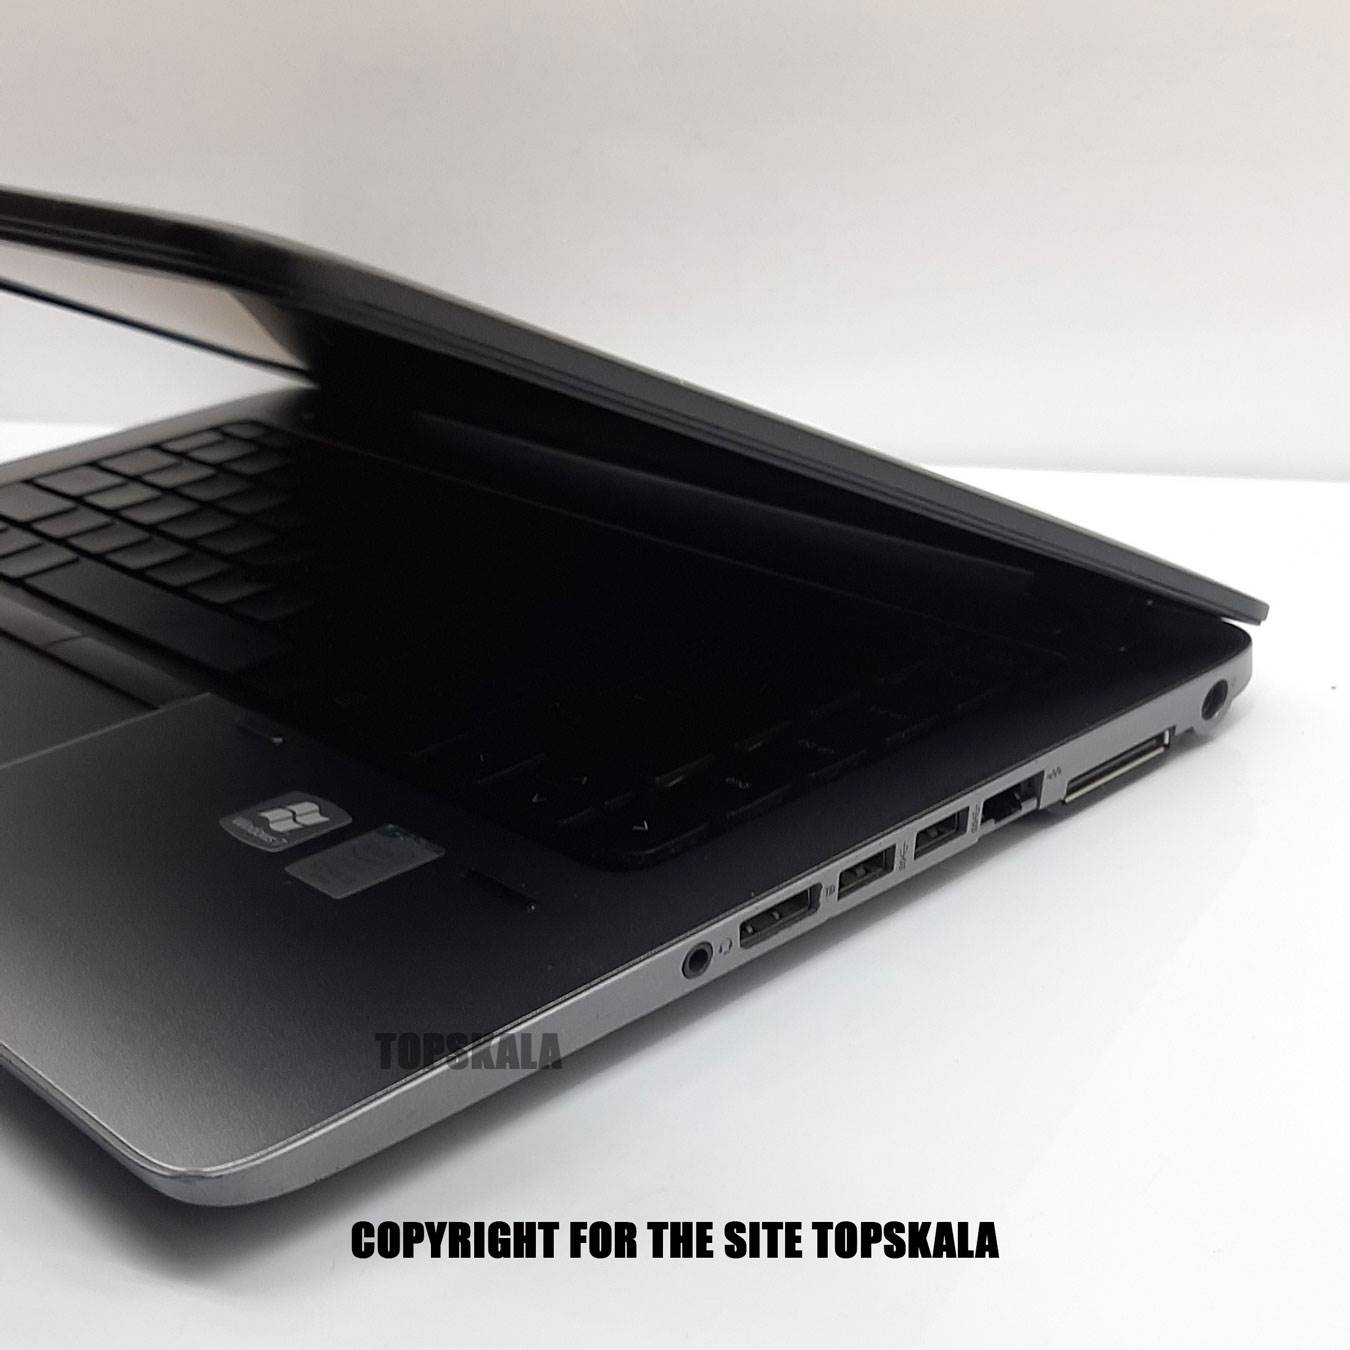 لپ تاپ استوک اچ پی مدل HP EliteBook 840 G1 با مشخصات i5-4th-8GB-1TB-HDD-4GB-intel-HD-4600laptop-stock-hp-model-eliteBook-840-G1-i5-4th-8gb-1tb-4gb-intel-hd